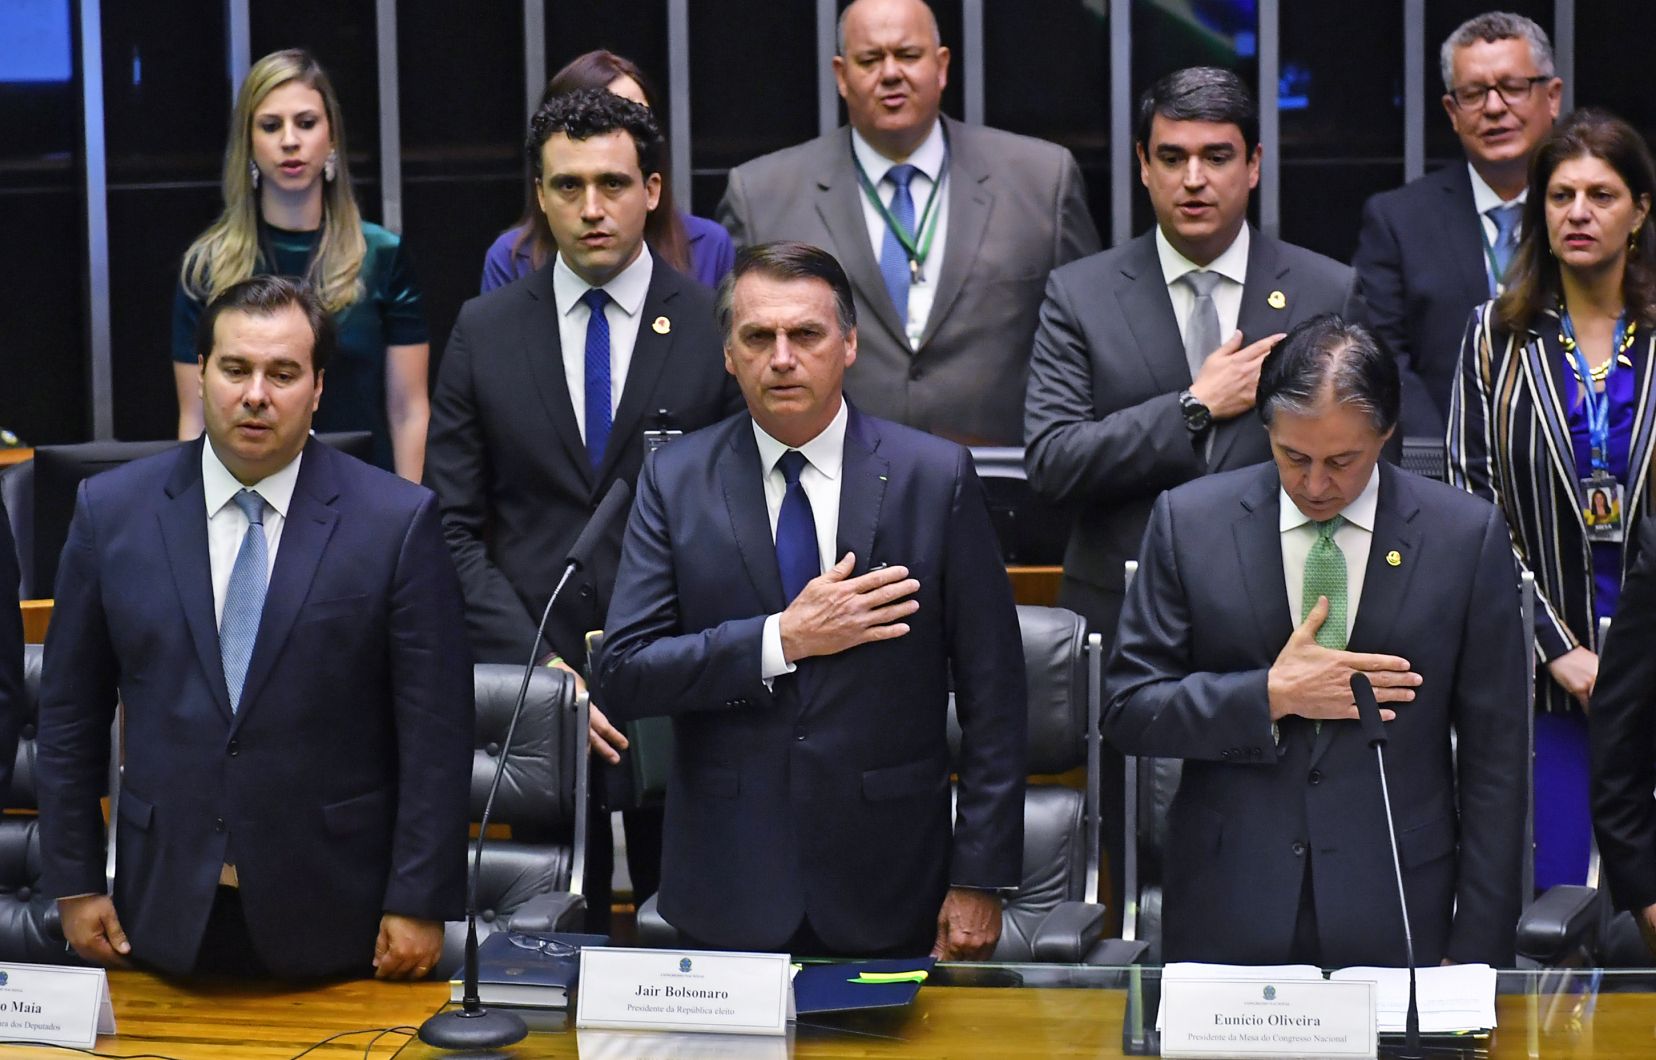 nouveau-president-bresilien-jair-bolsonaro/image-jpg.jpeg